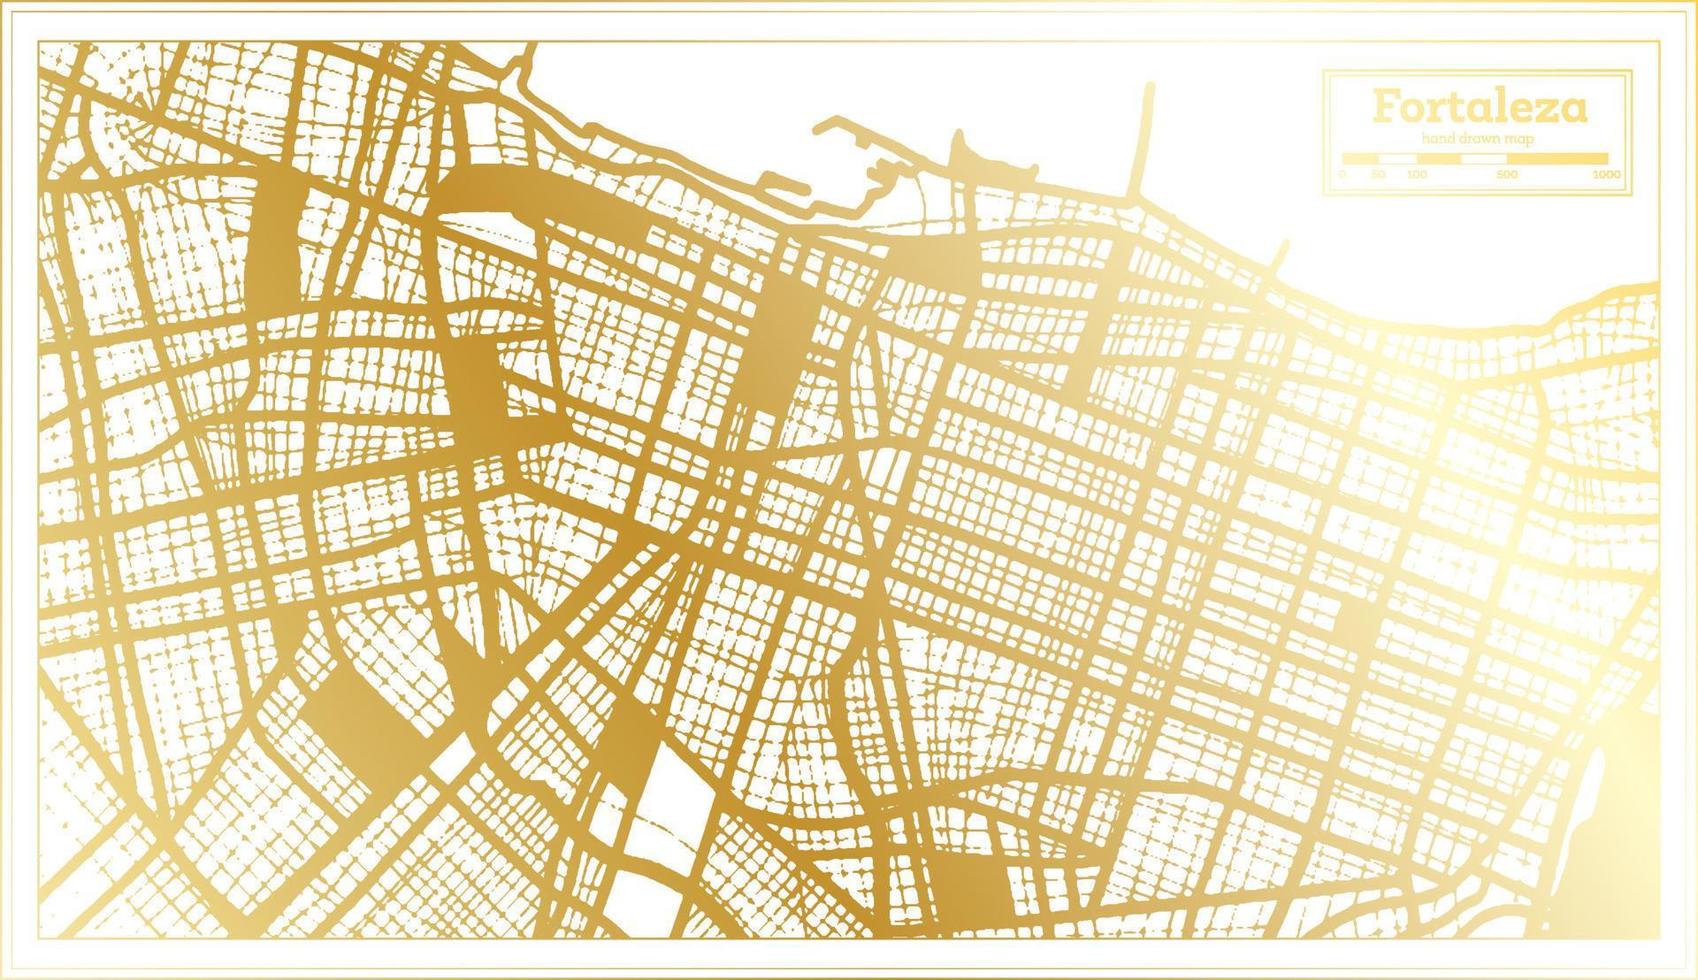 Fortaleza Brasilien Stadtplan im Retro-Stil in goldener Farbe. Übersichtskarte. vektor